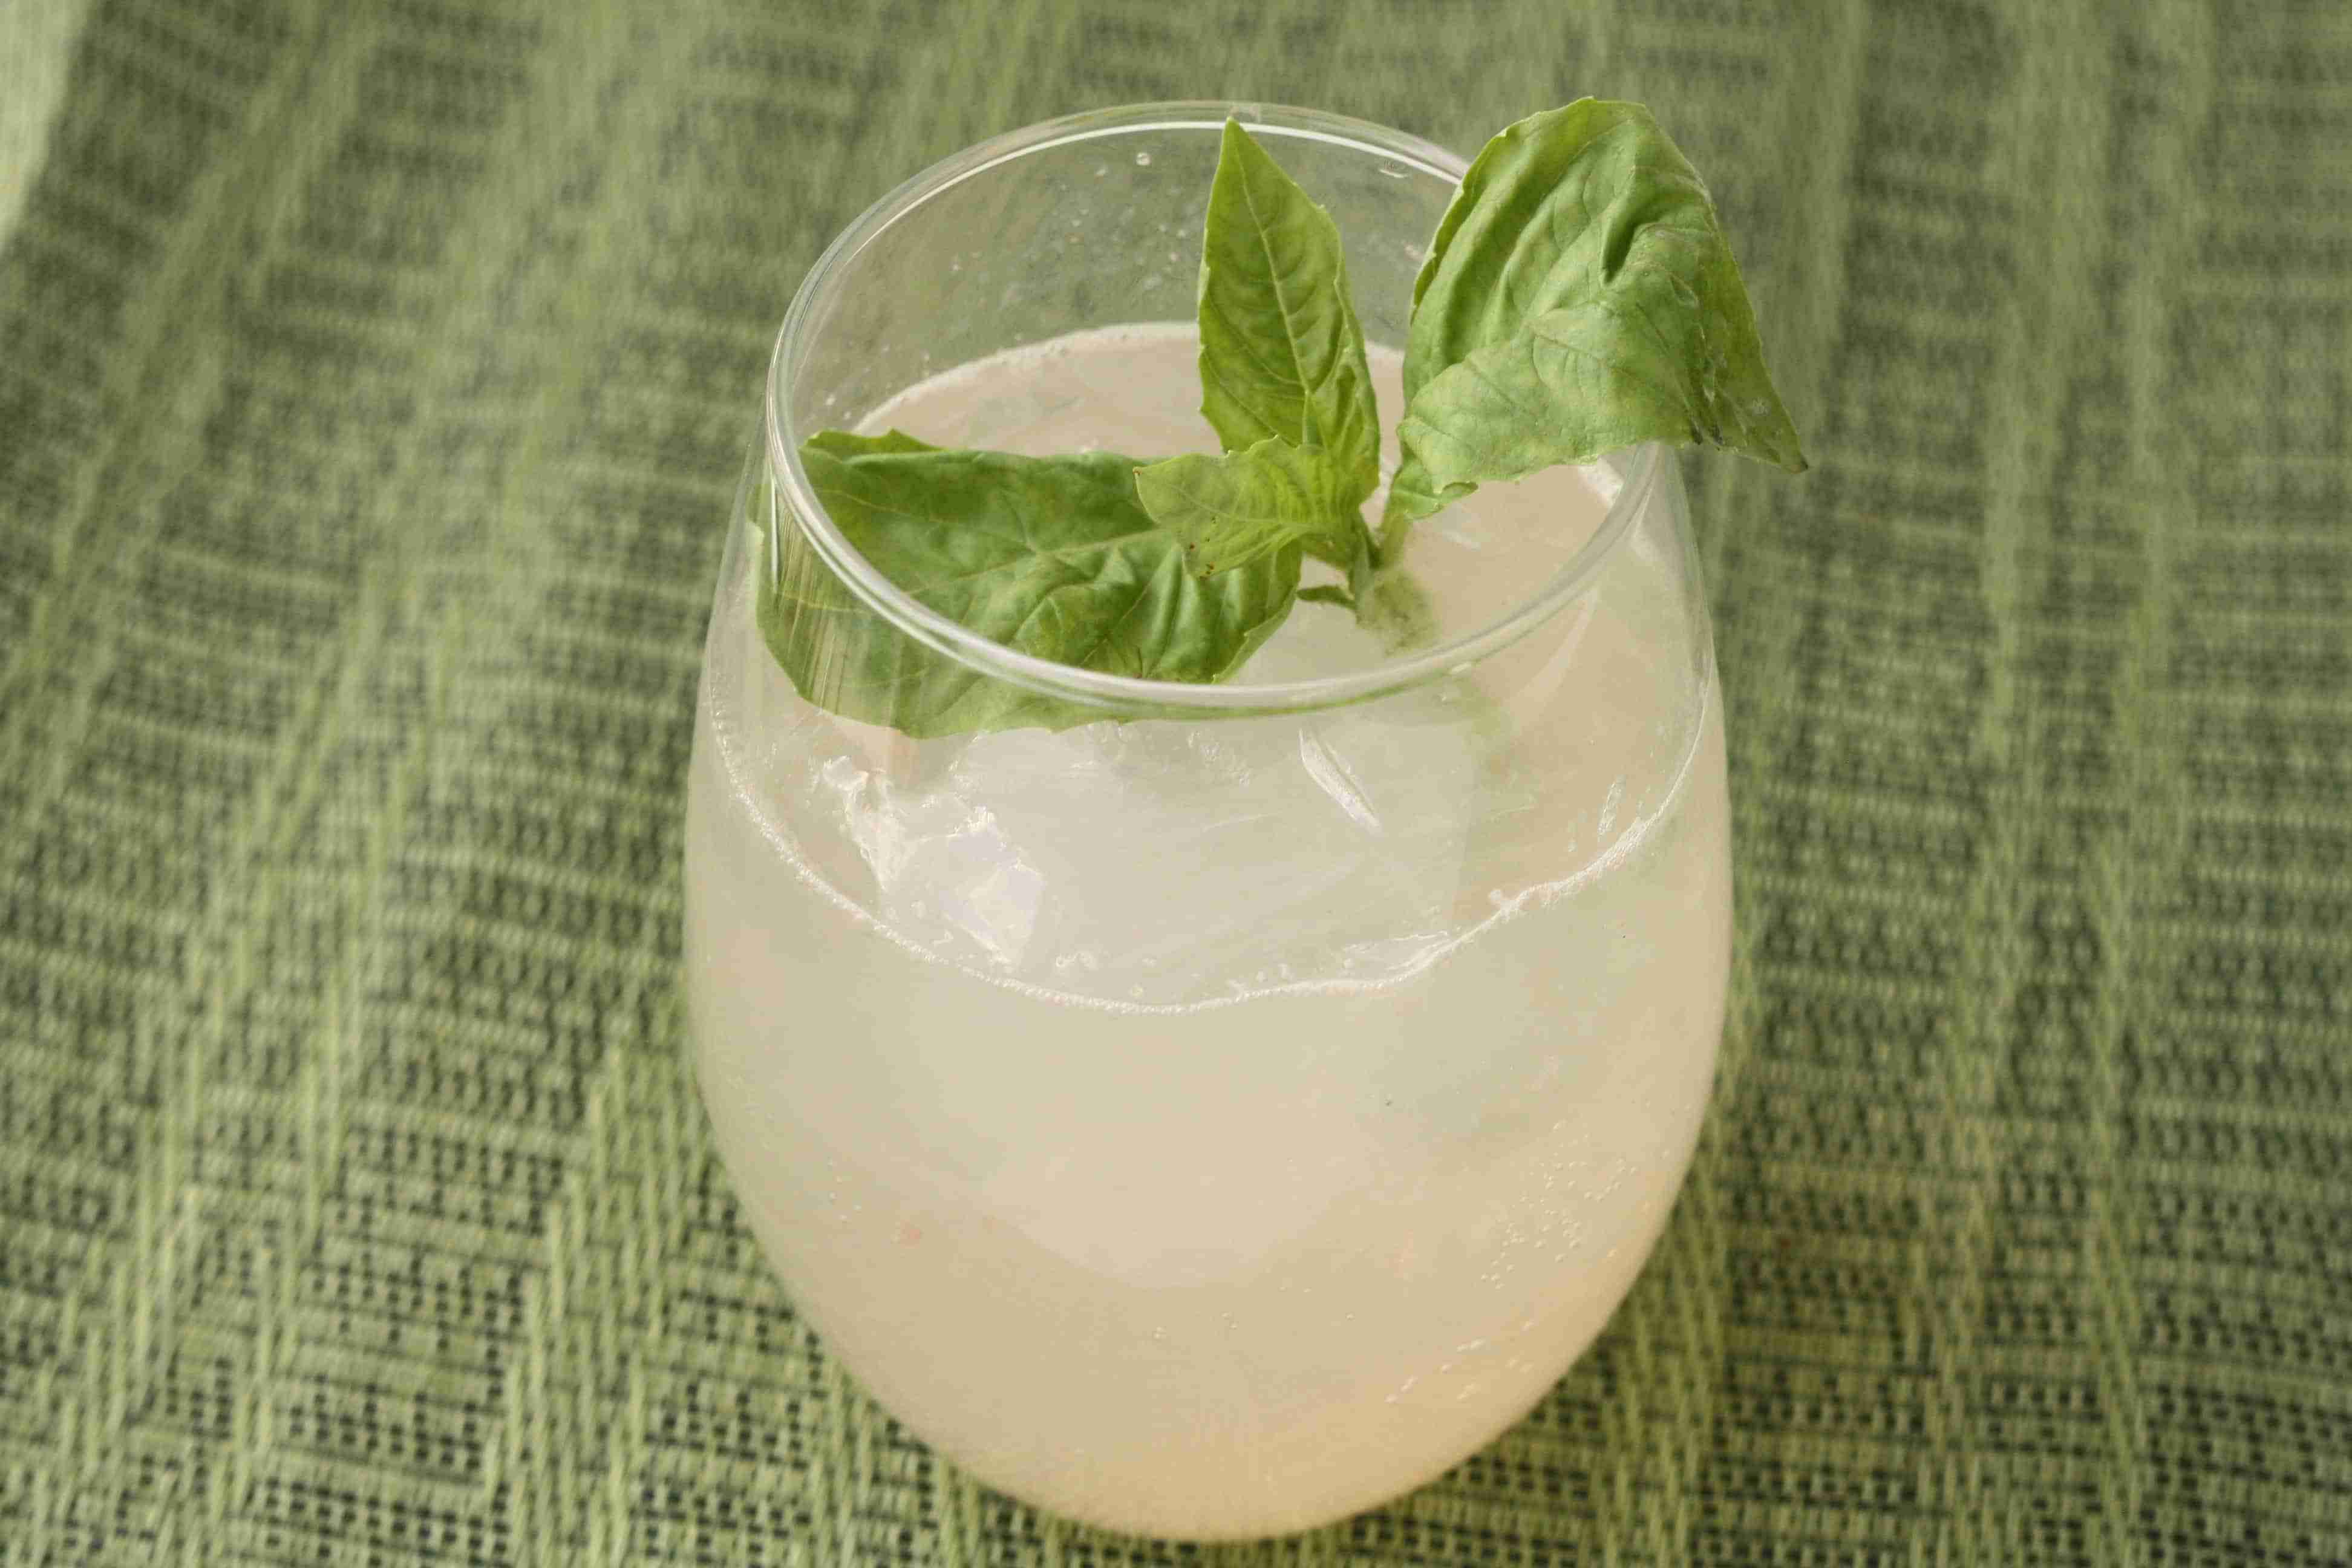 It’s Thirsty Thursday!  Enjoy this refreshing Grapefruit Basil cocktail!